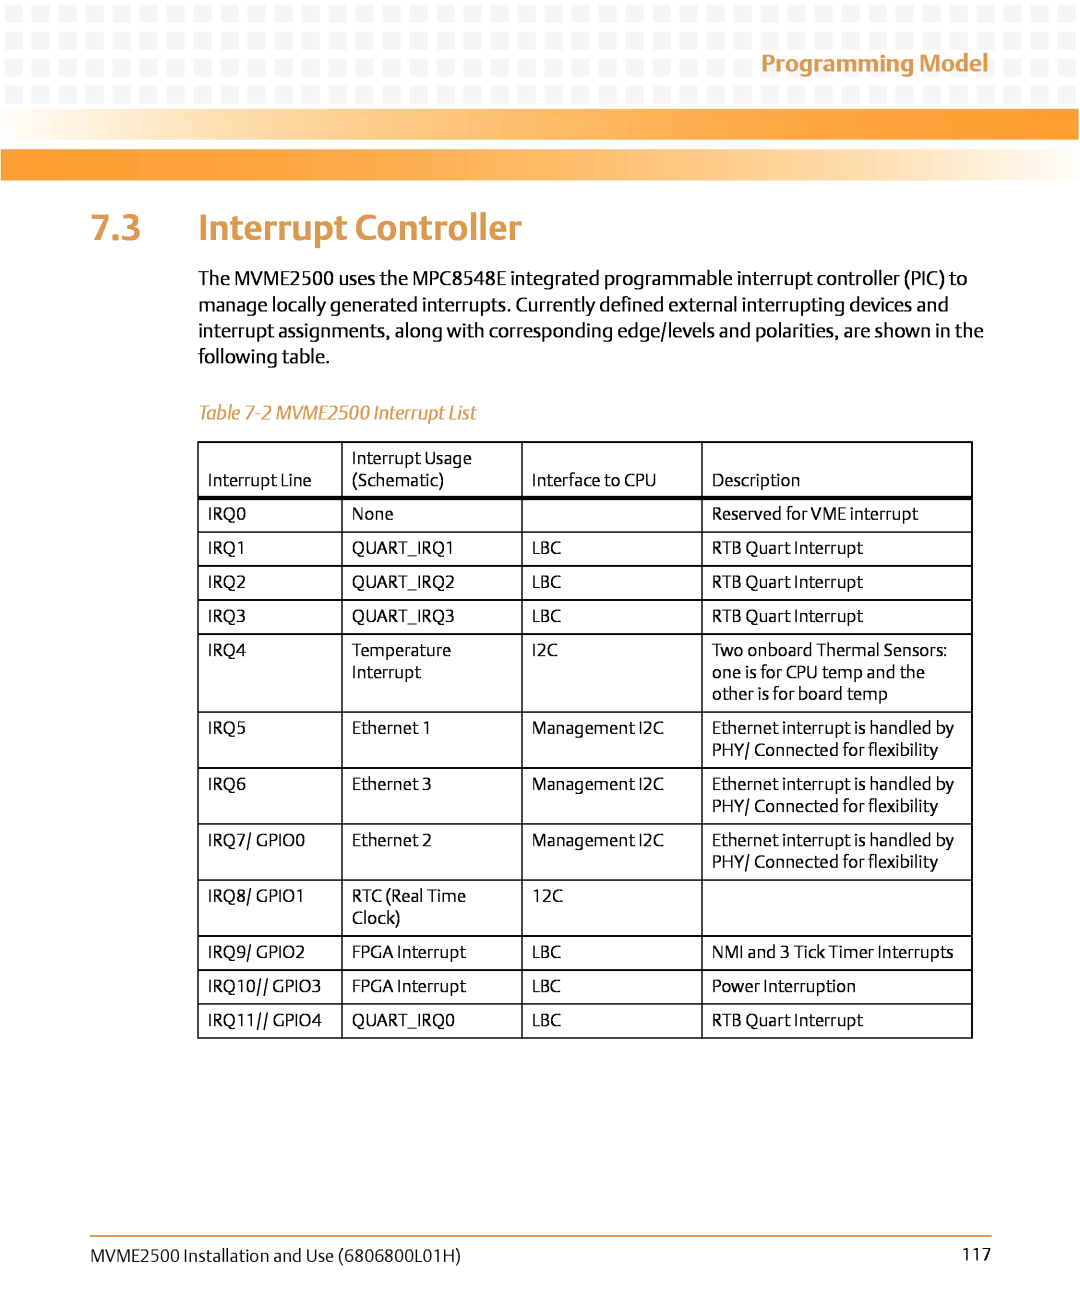 Emerson manual Interrupt Controller, 2 MVME2500 Interrupt List, Programming Model 